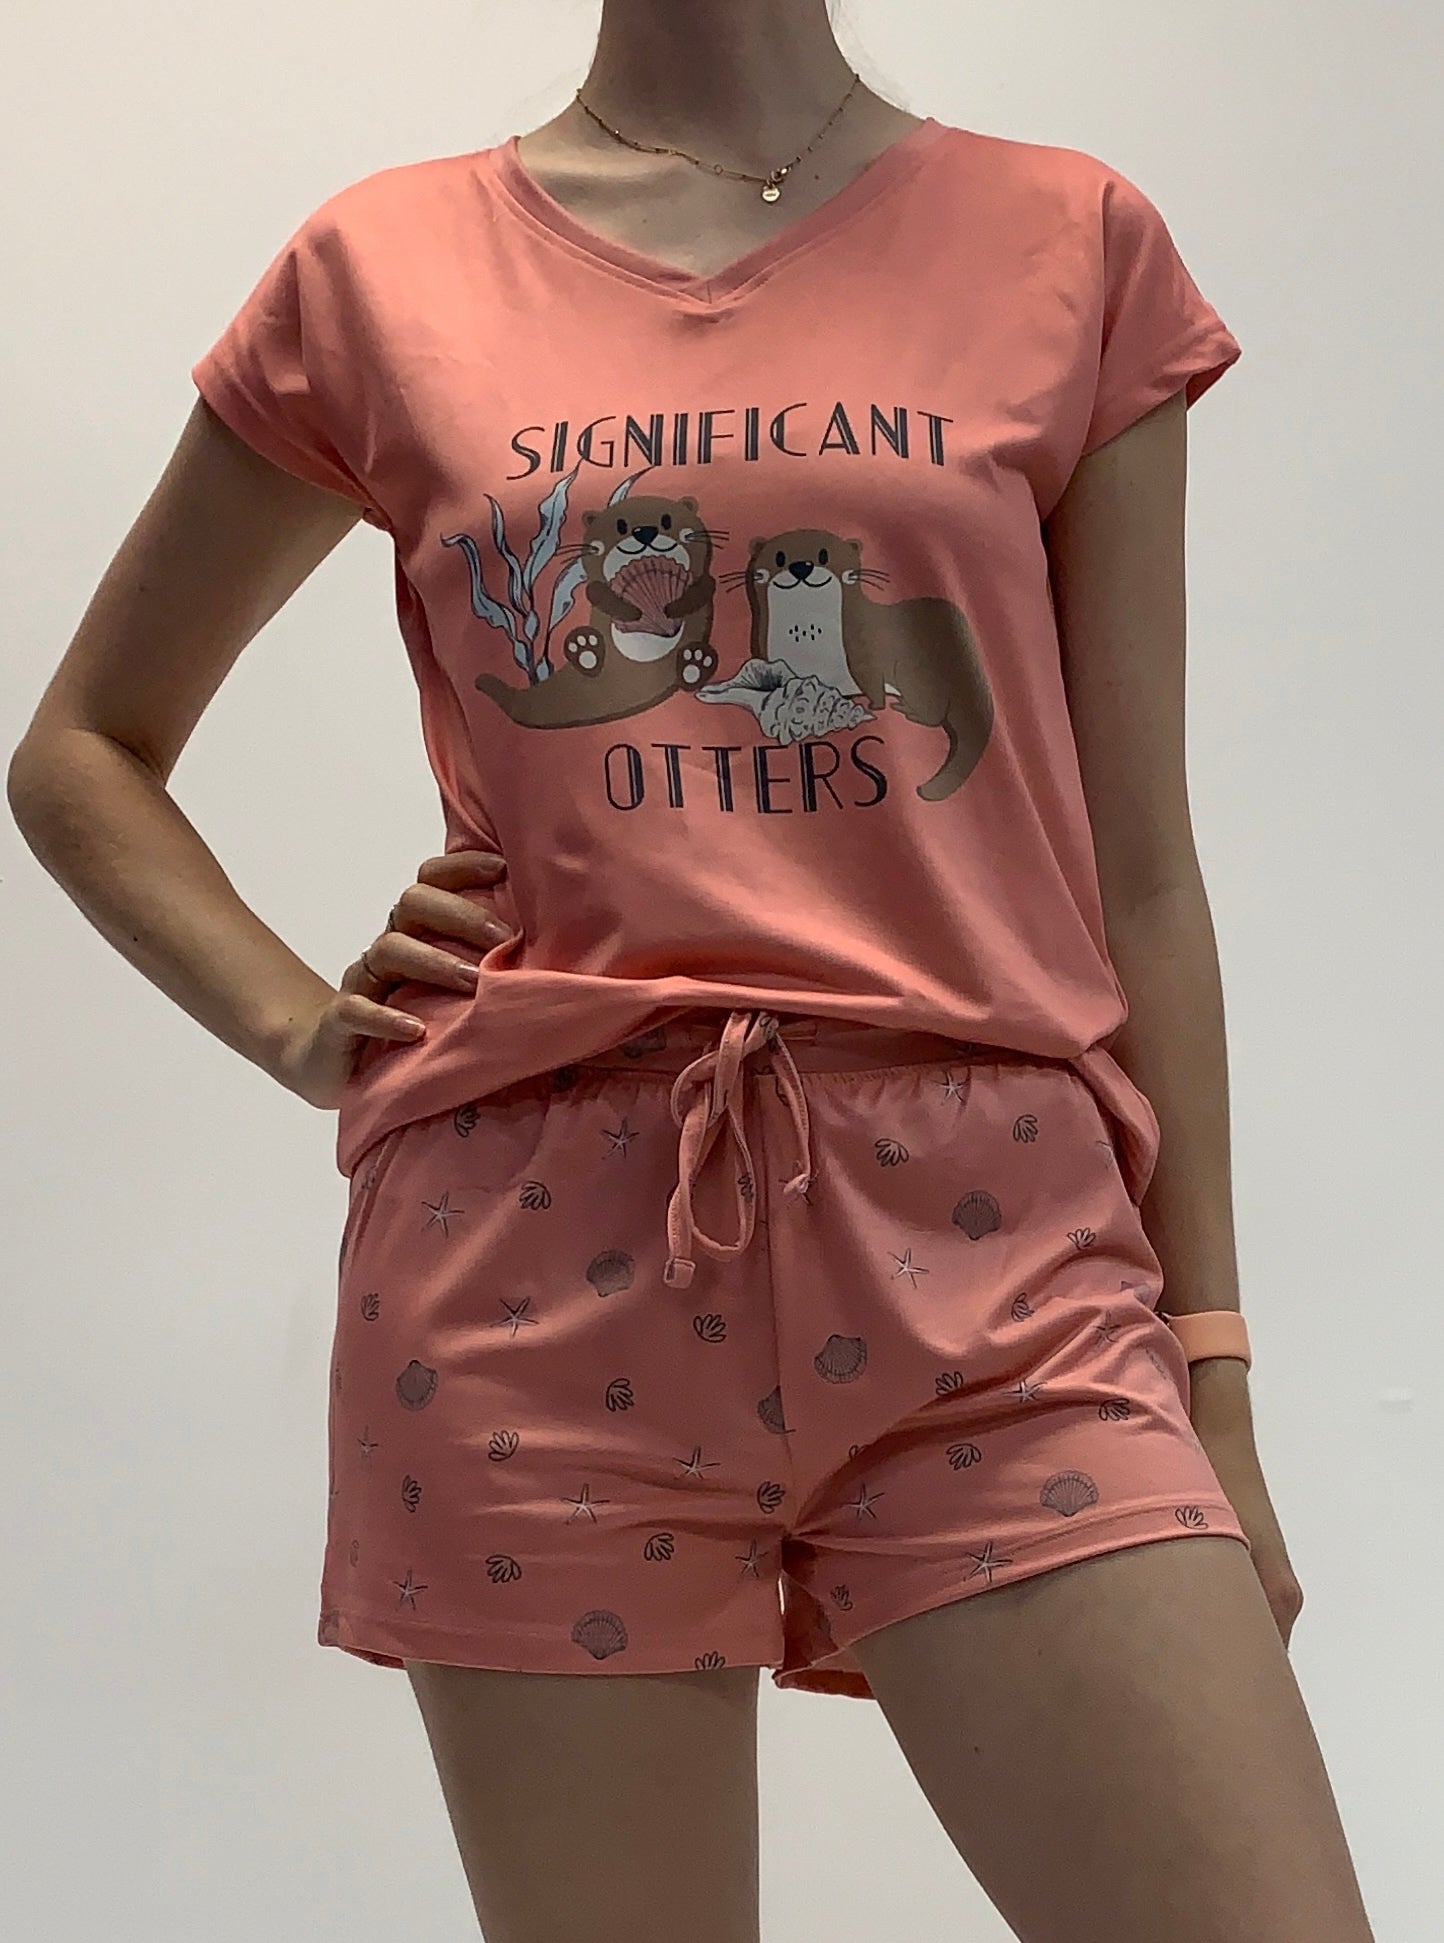 Pyjama short corail Mandarine&Co pour femme